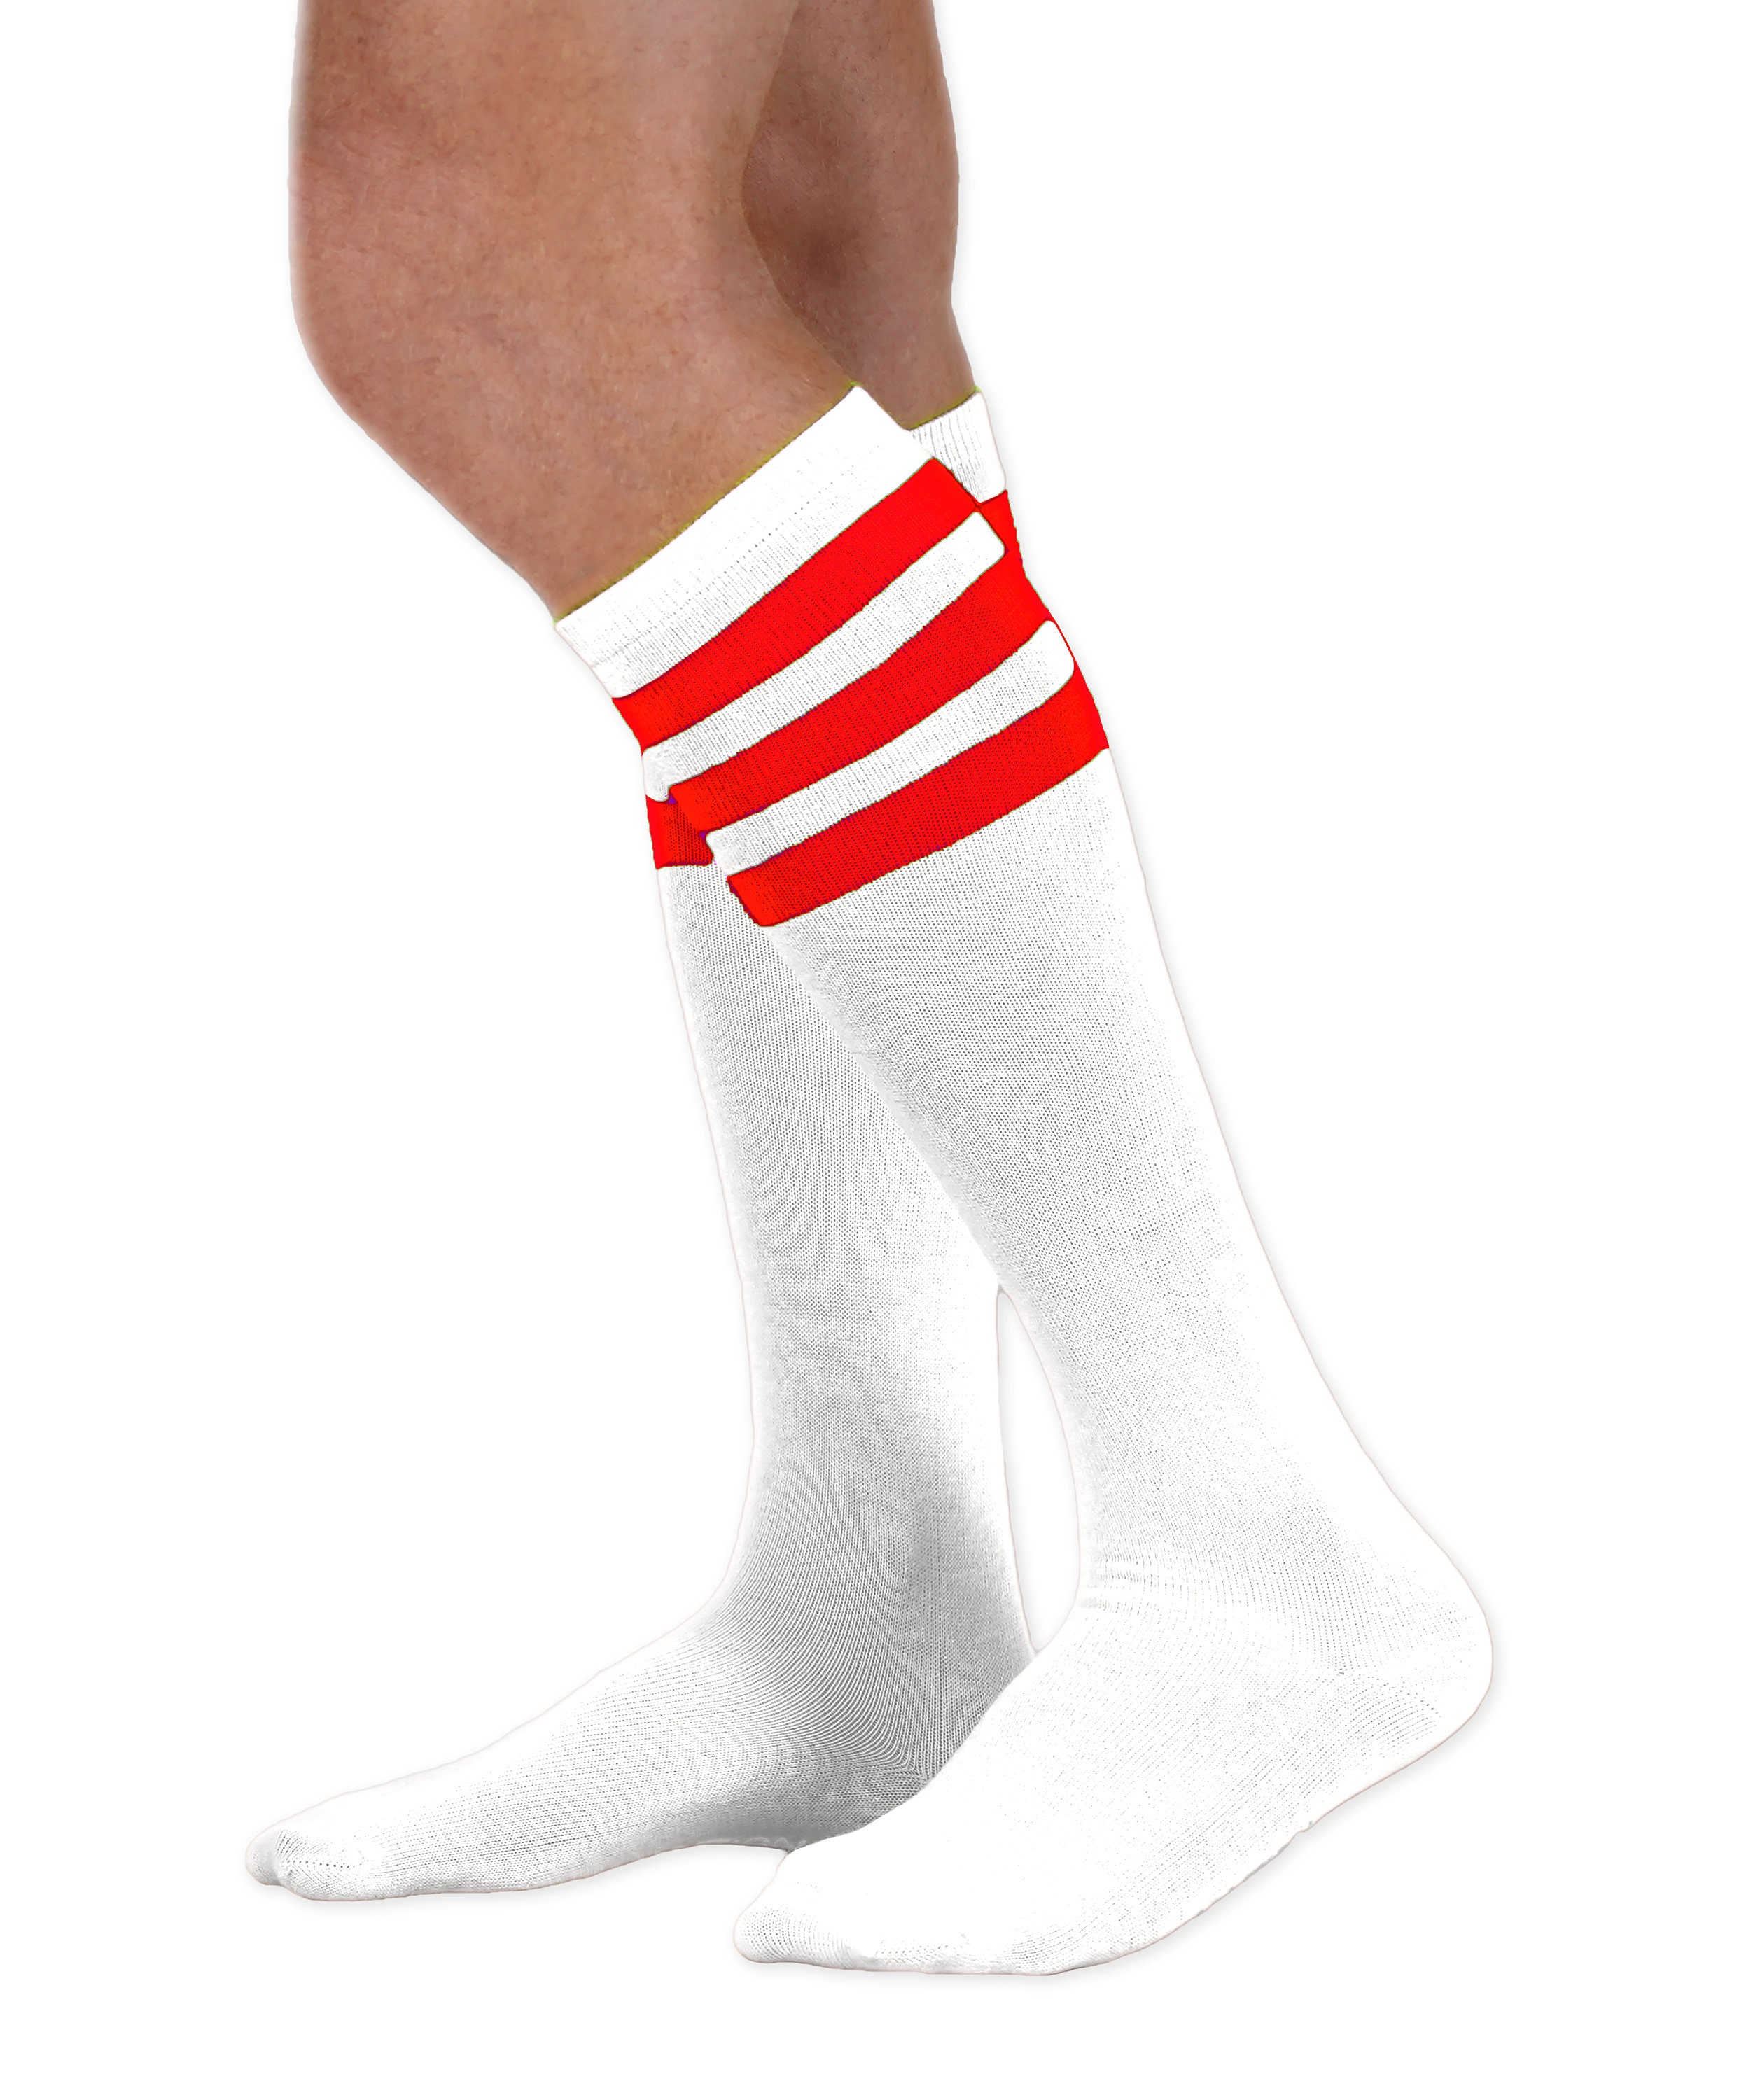 AMERICAN SOCKS RedNoise Mid High socks